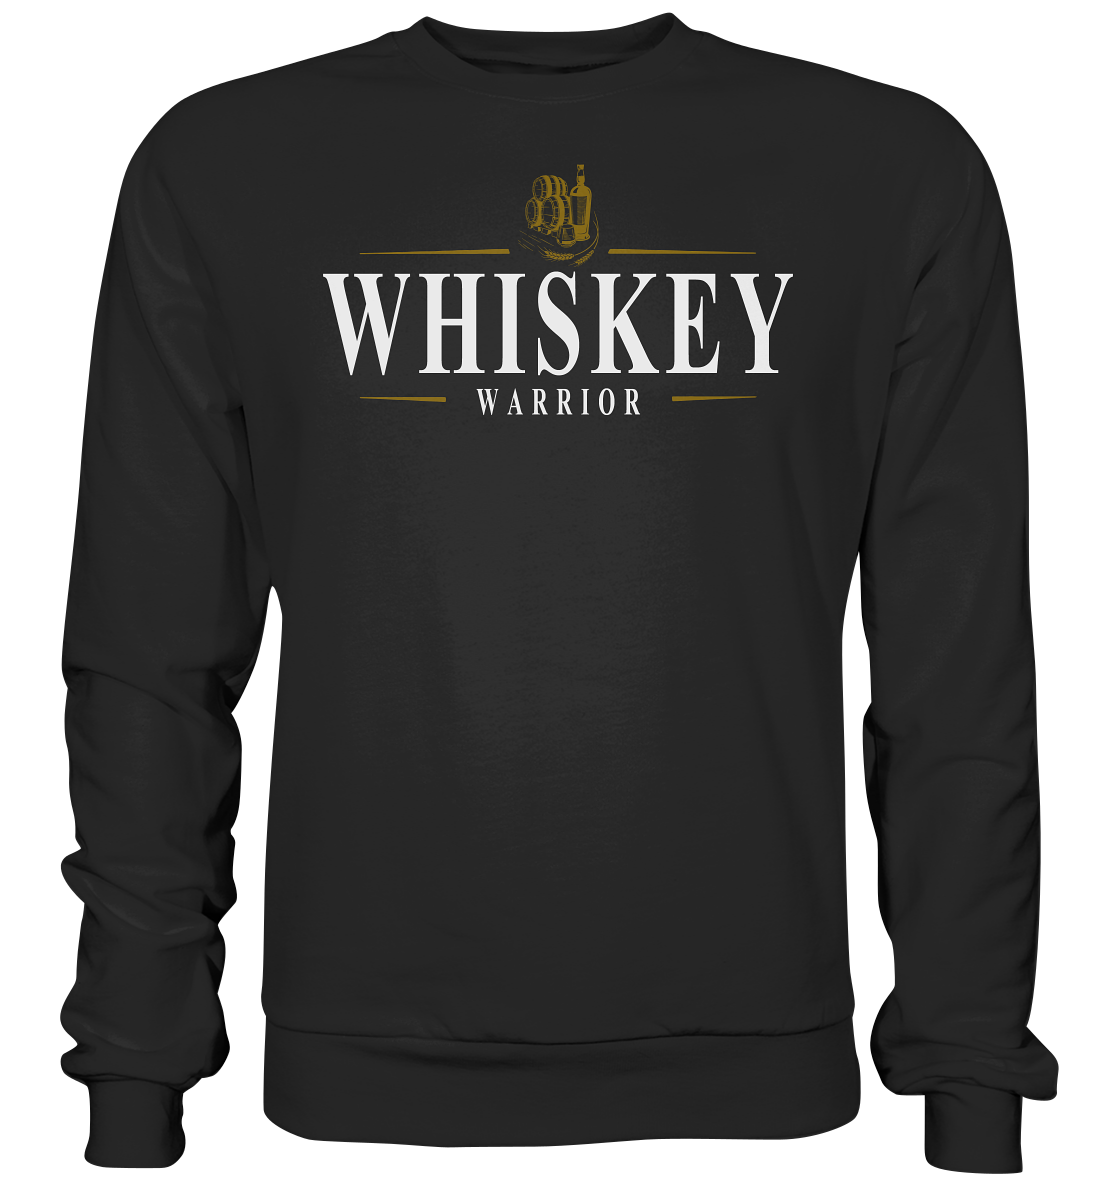 Whiskey "Warrior" - Premium Sweatshirt